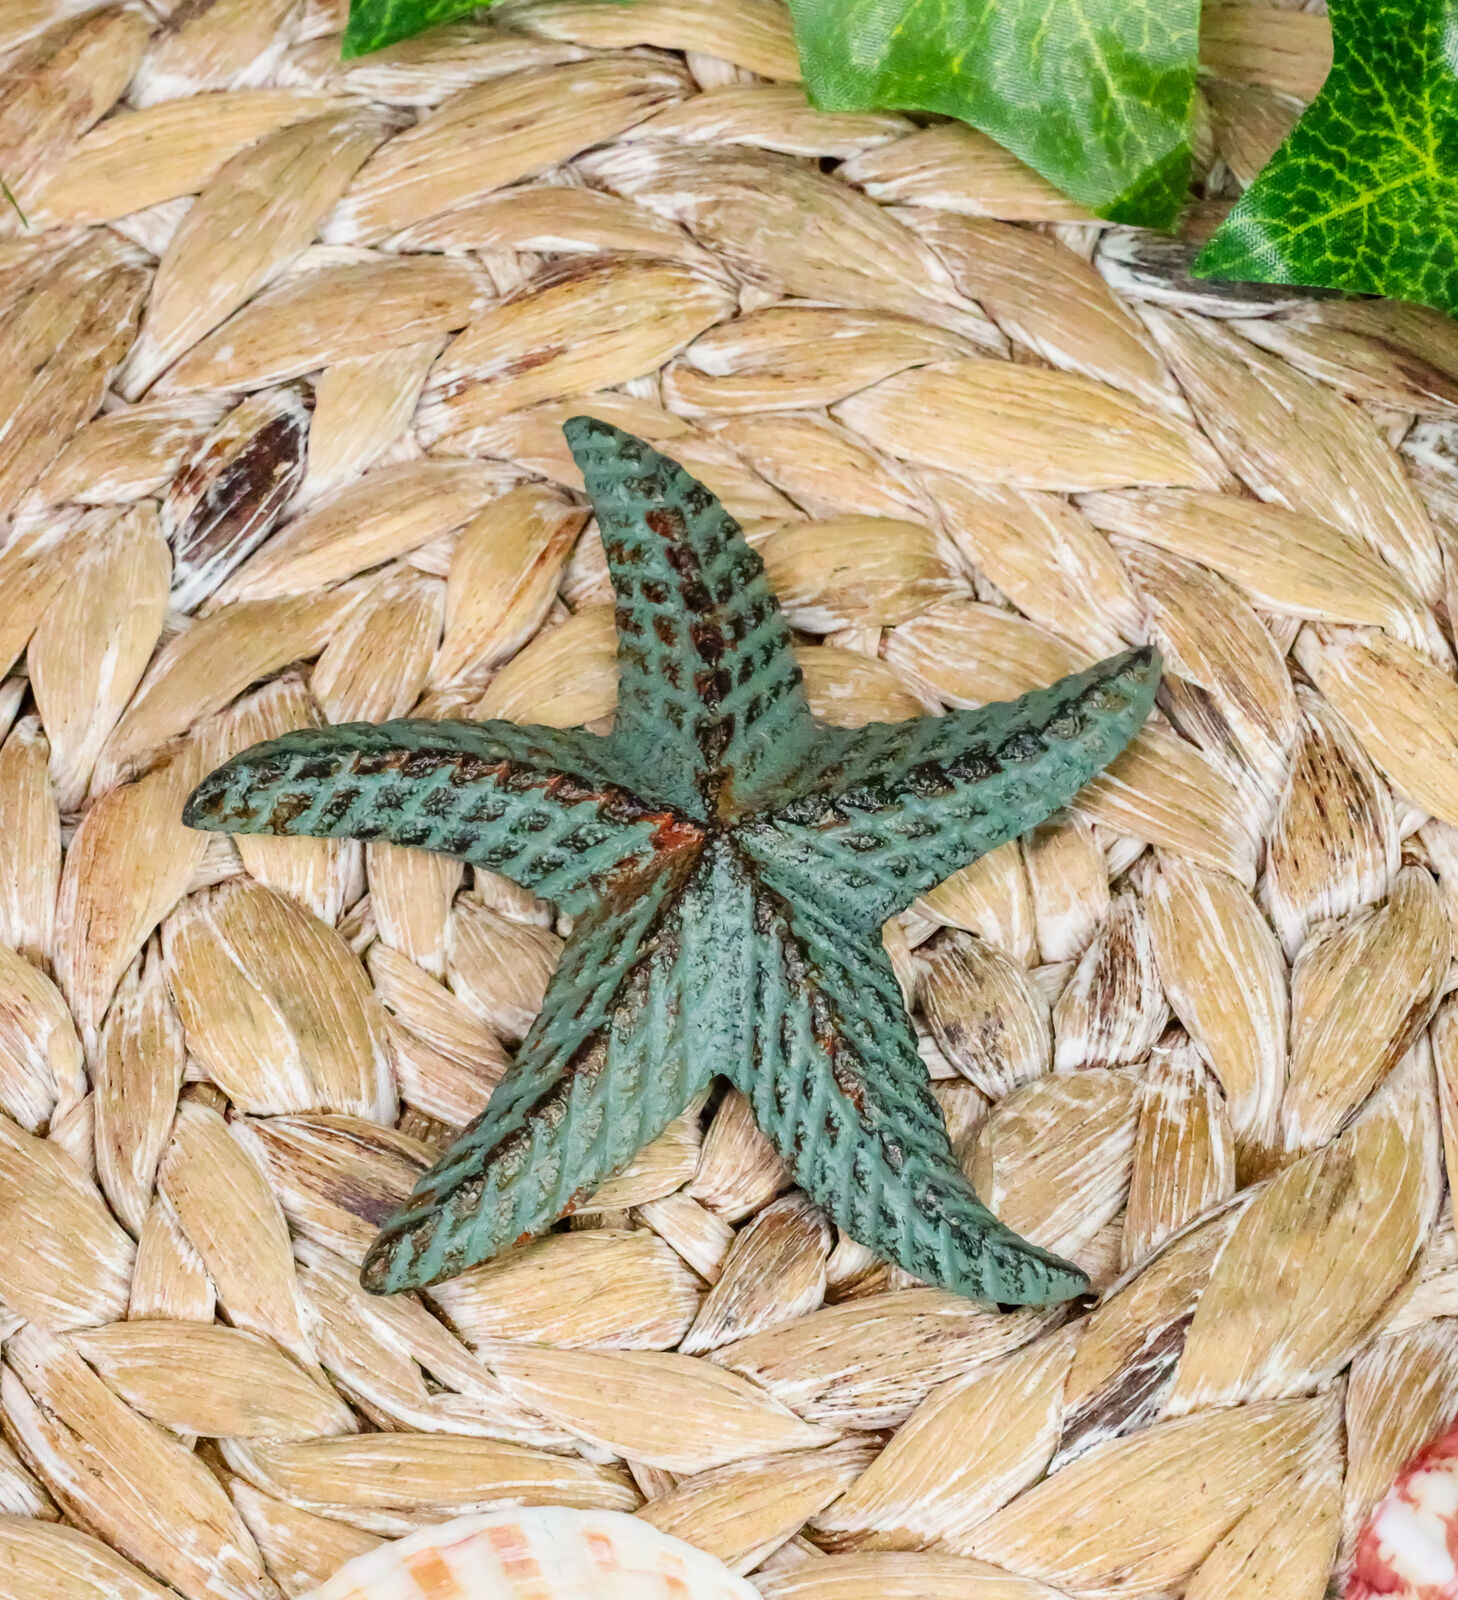 Cast Iron Verdigris Ocean Coral Sea Star Shell Starfish Decorative Accent Statue